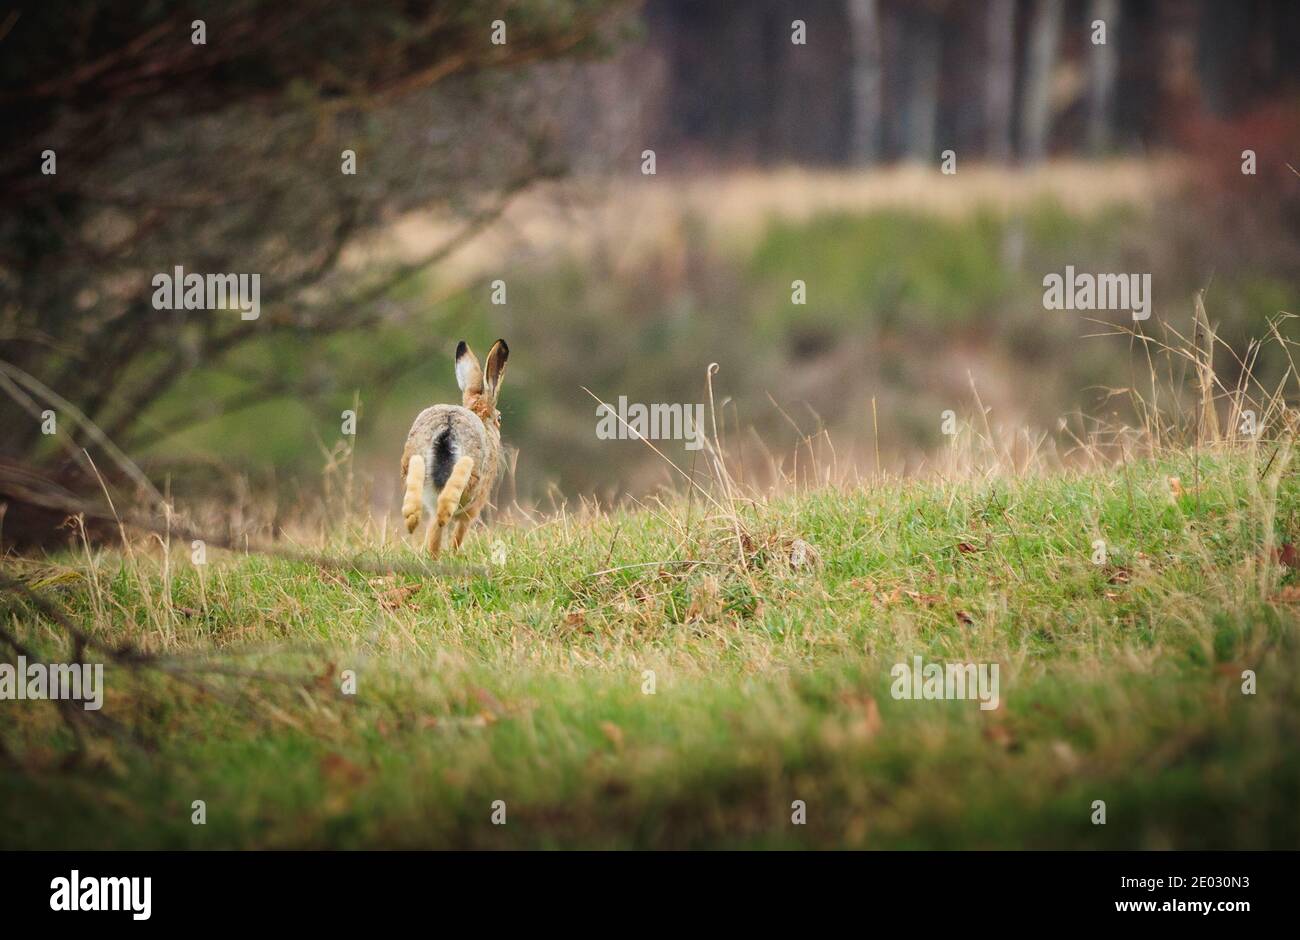 European hare (Lepus europaeus) in sprint on grass Stock Photo